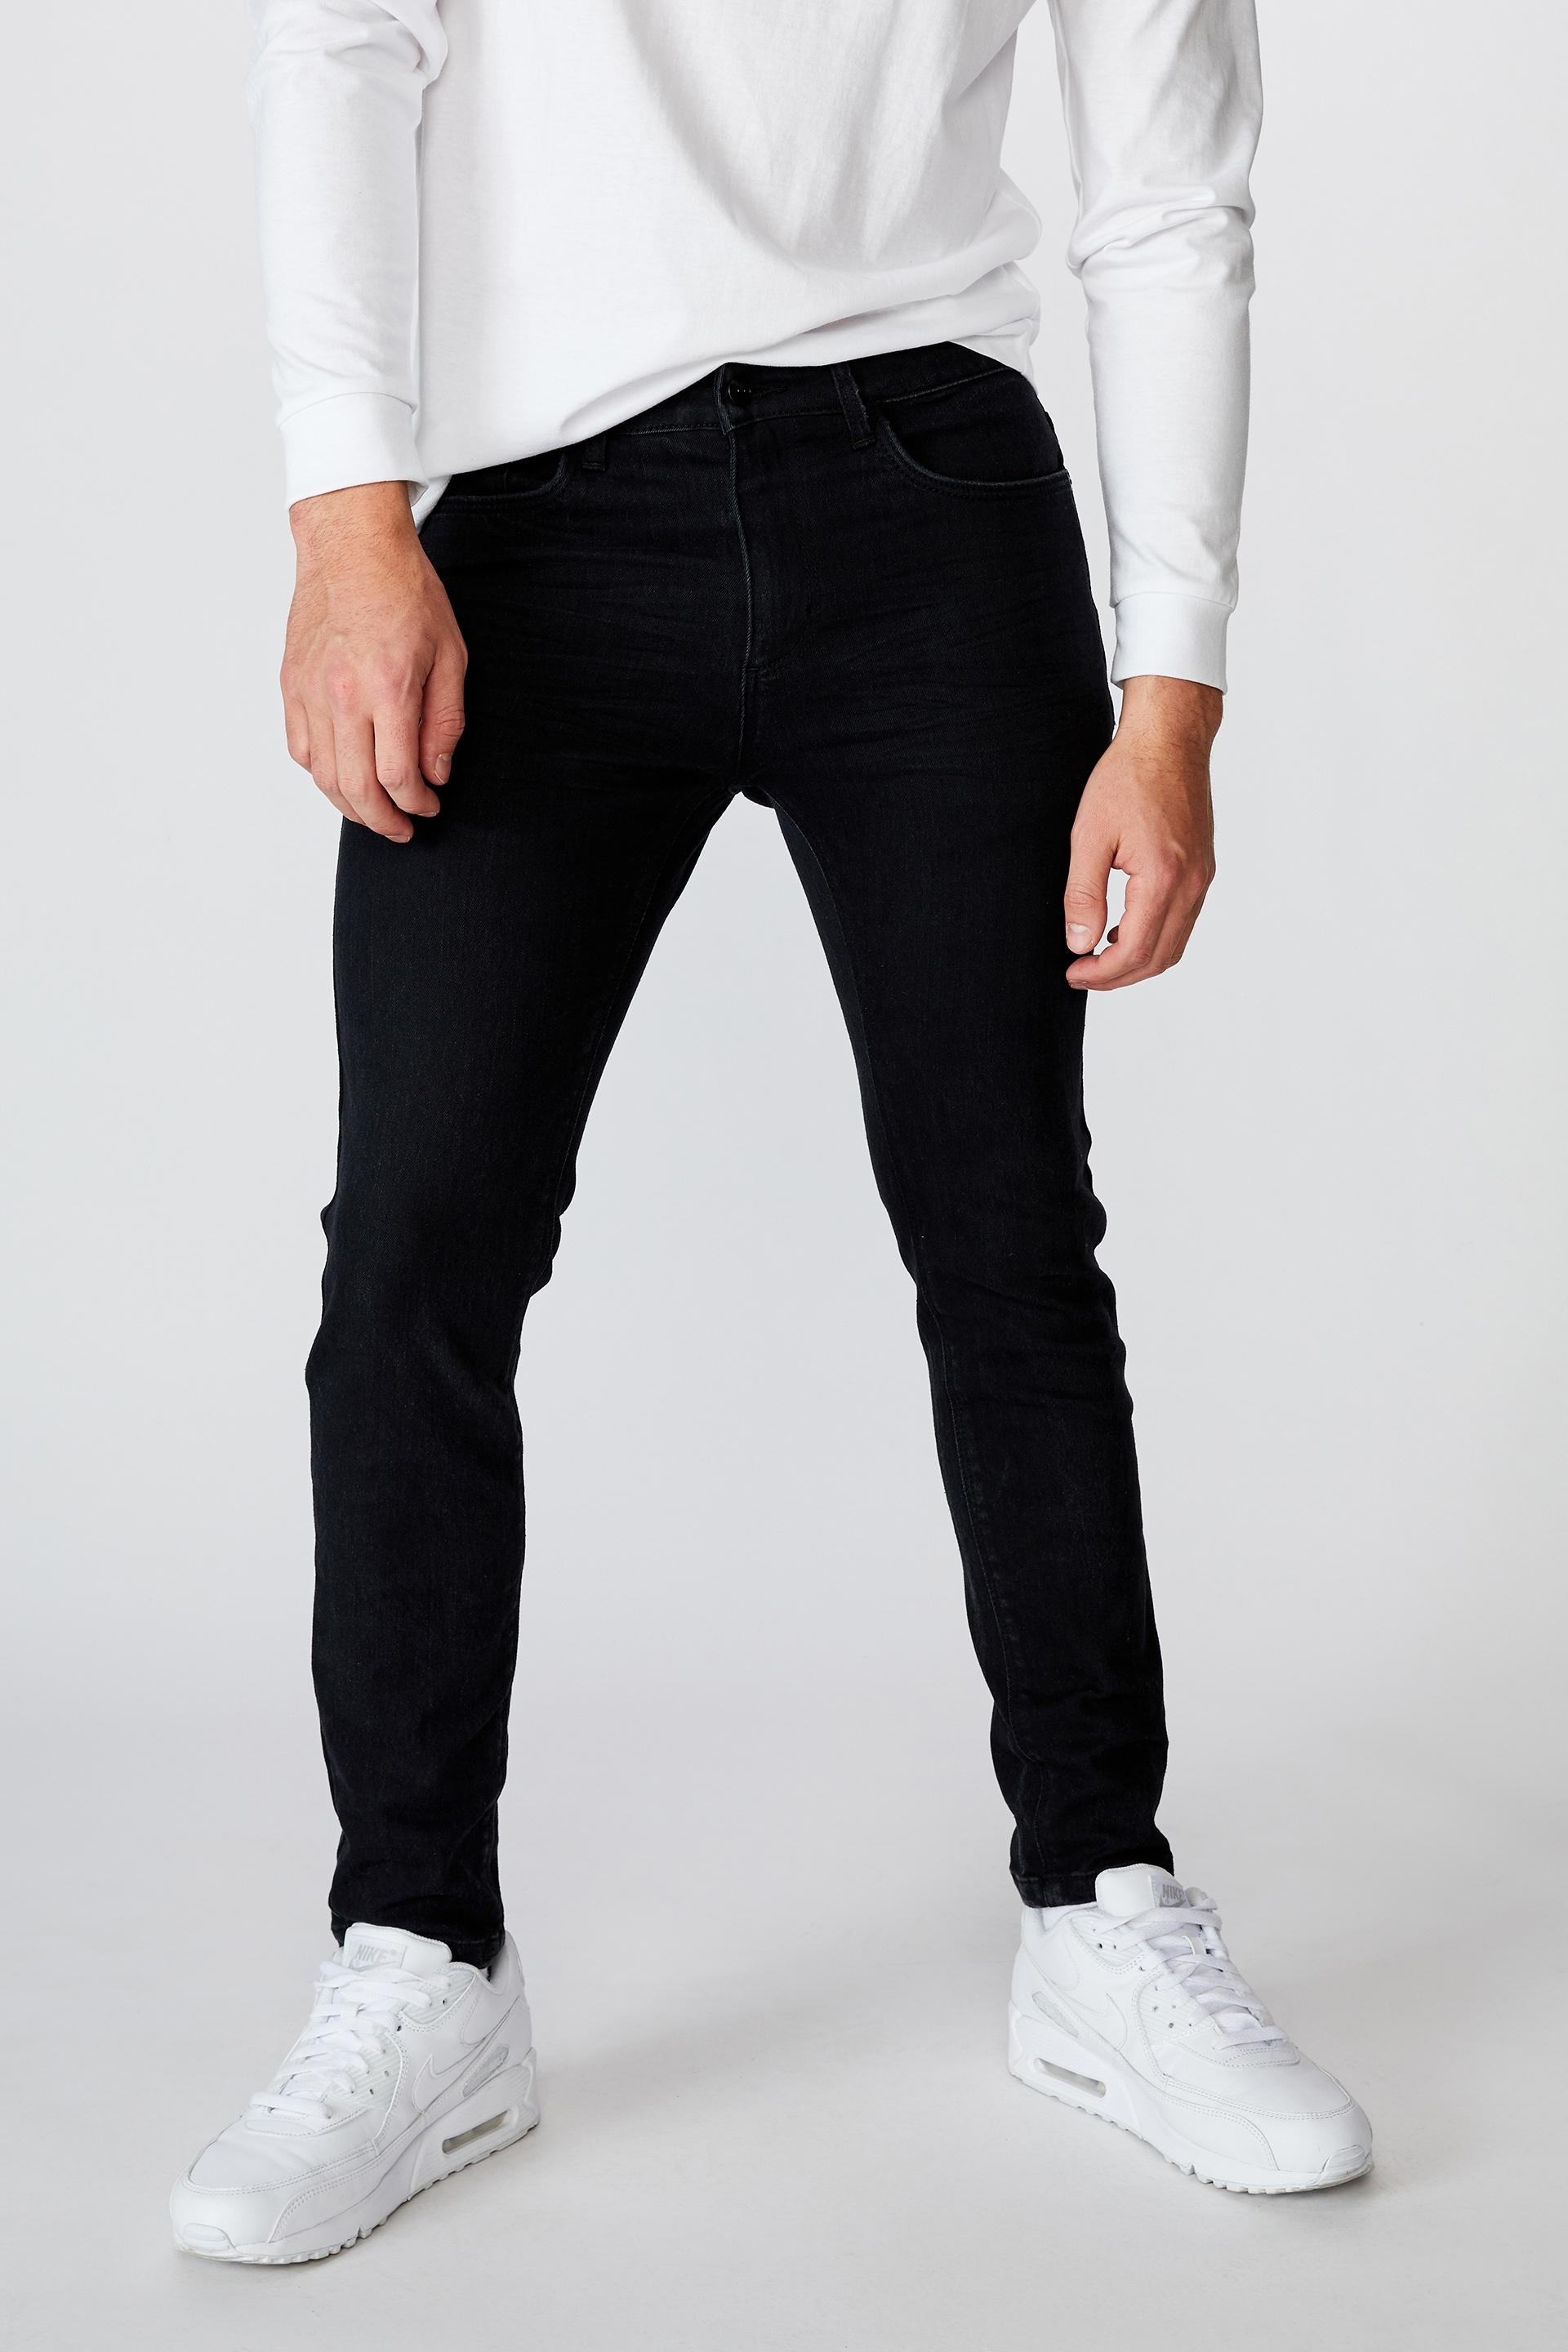 Super skinny jean - true black Factorie Jeans | Superbalist.com